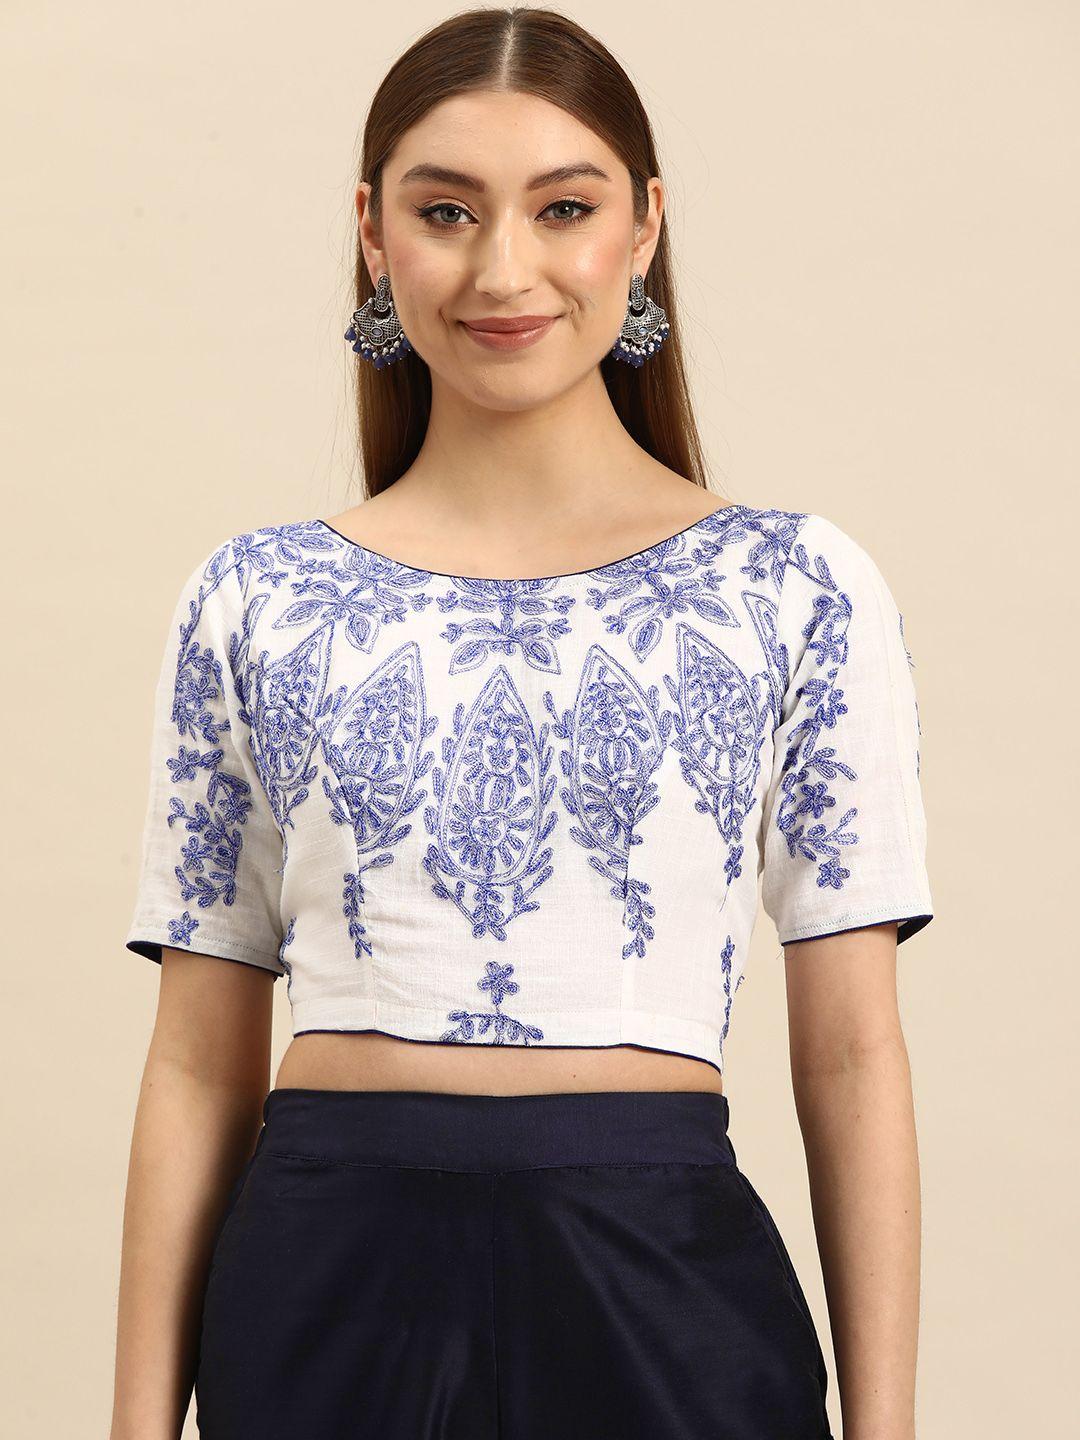 tantkatha embroidered thread work saree blouse